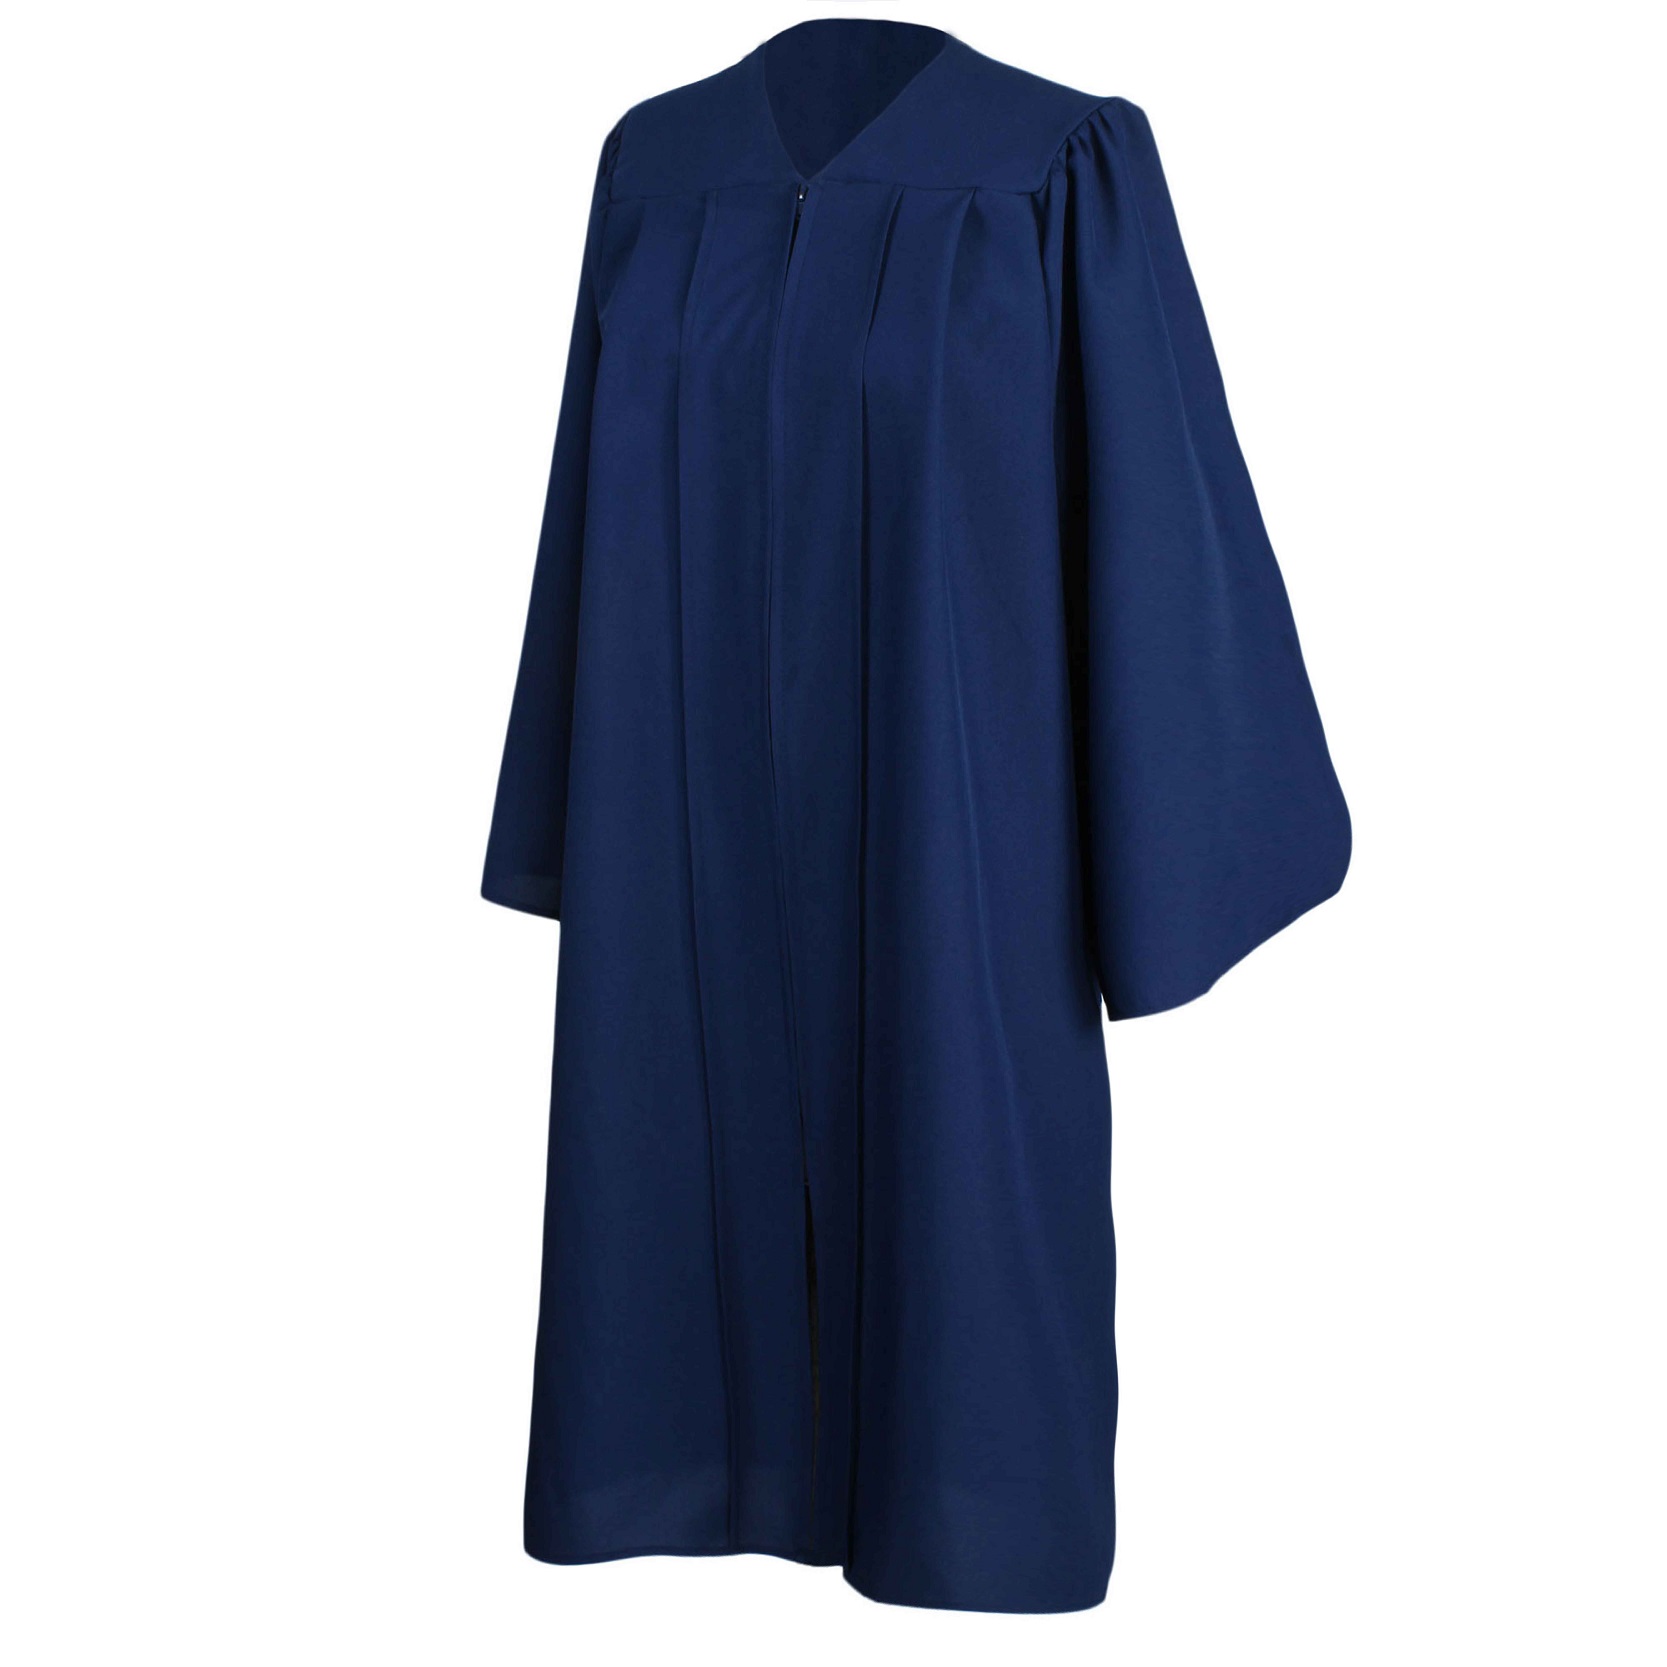 Shiny Finish Graduation Gown - Wanneroo Uniforms Perth